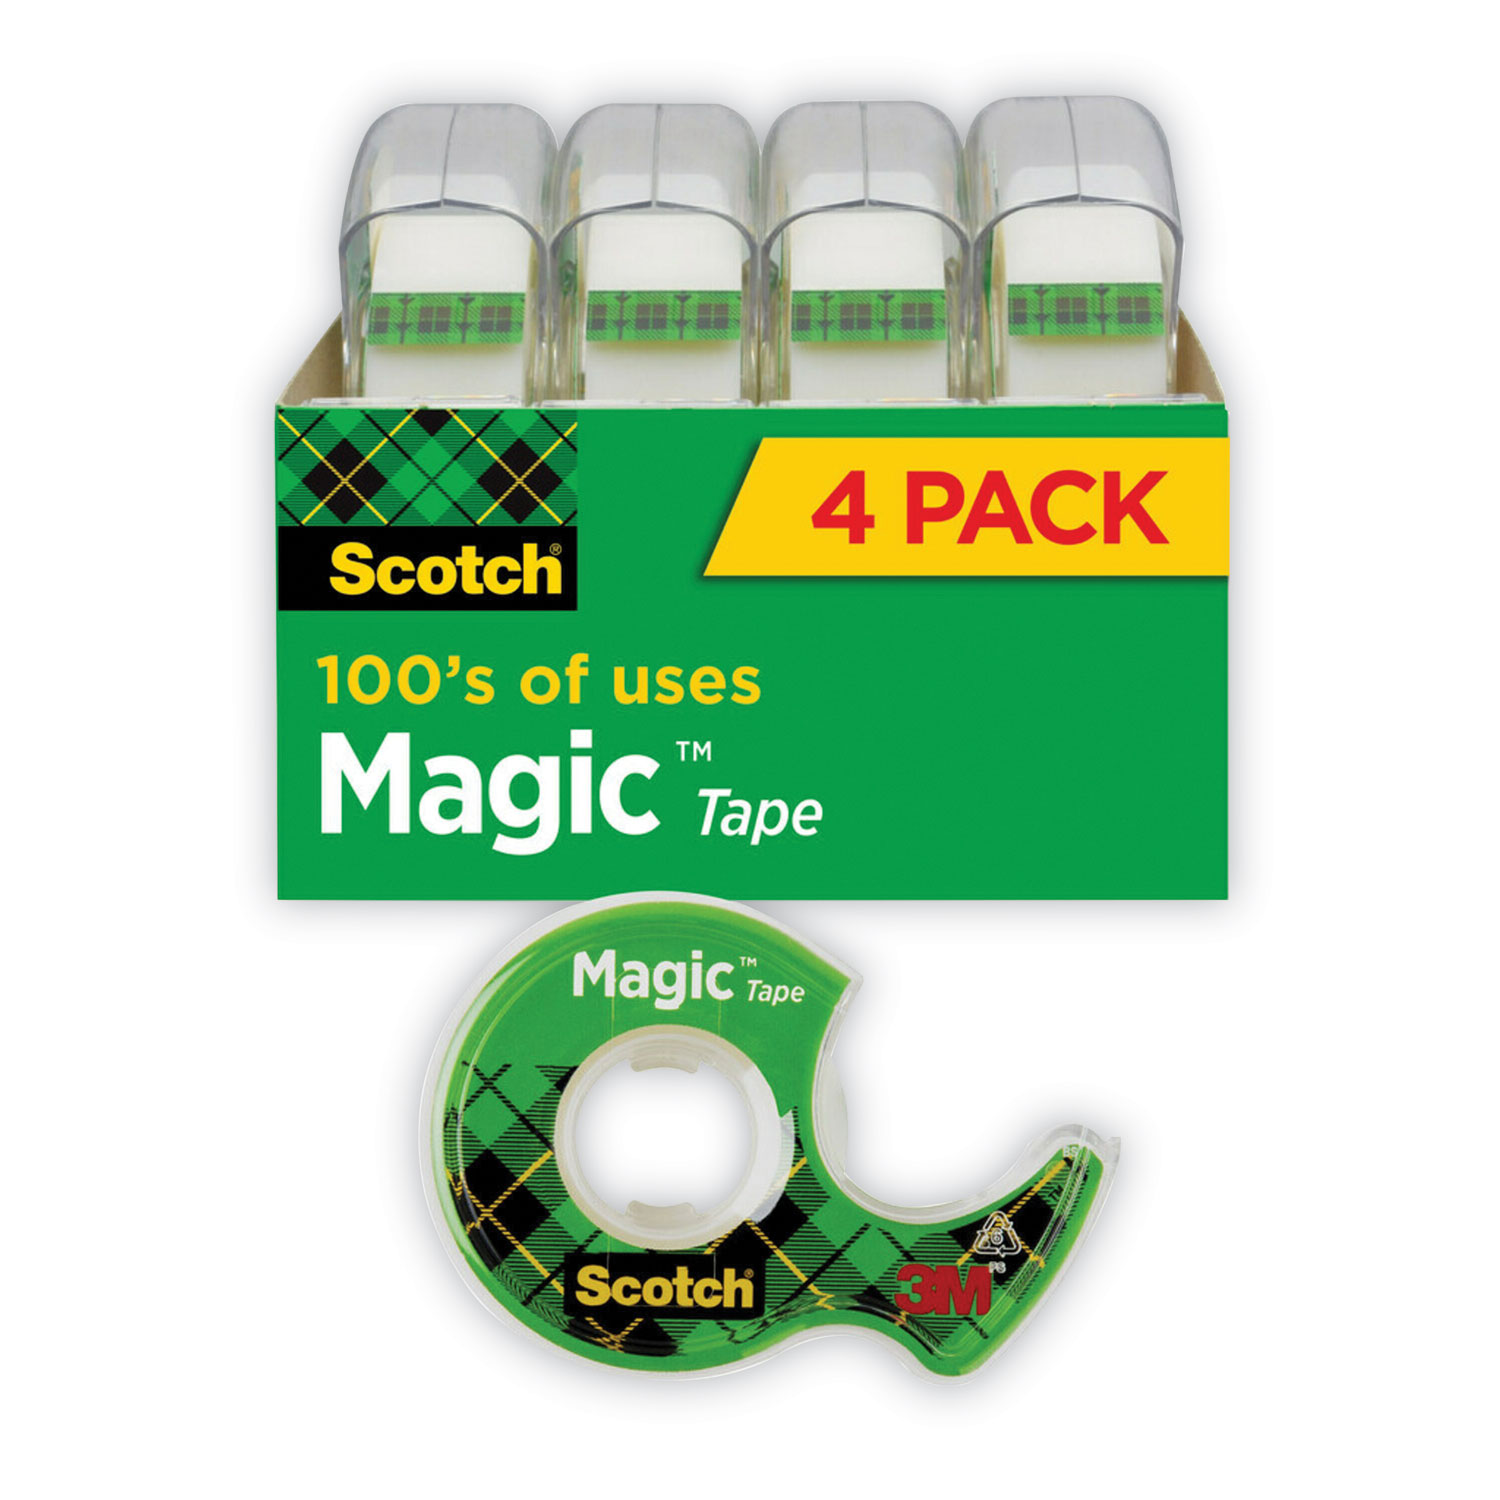 Scotch Magic Tape Desktop Dispenser Value Pack